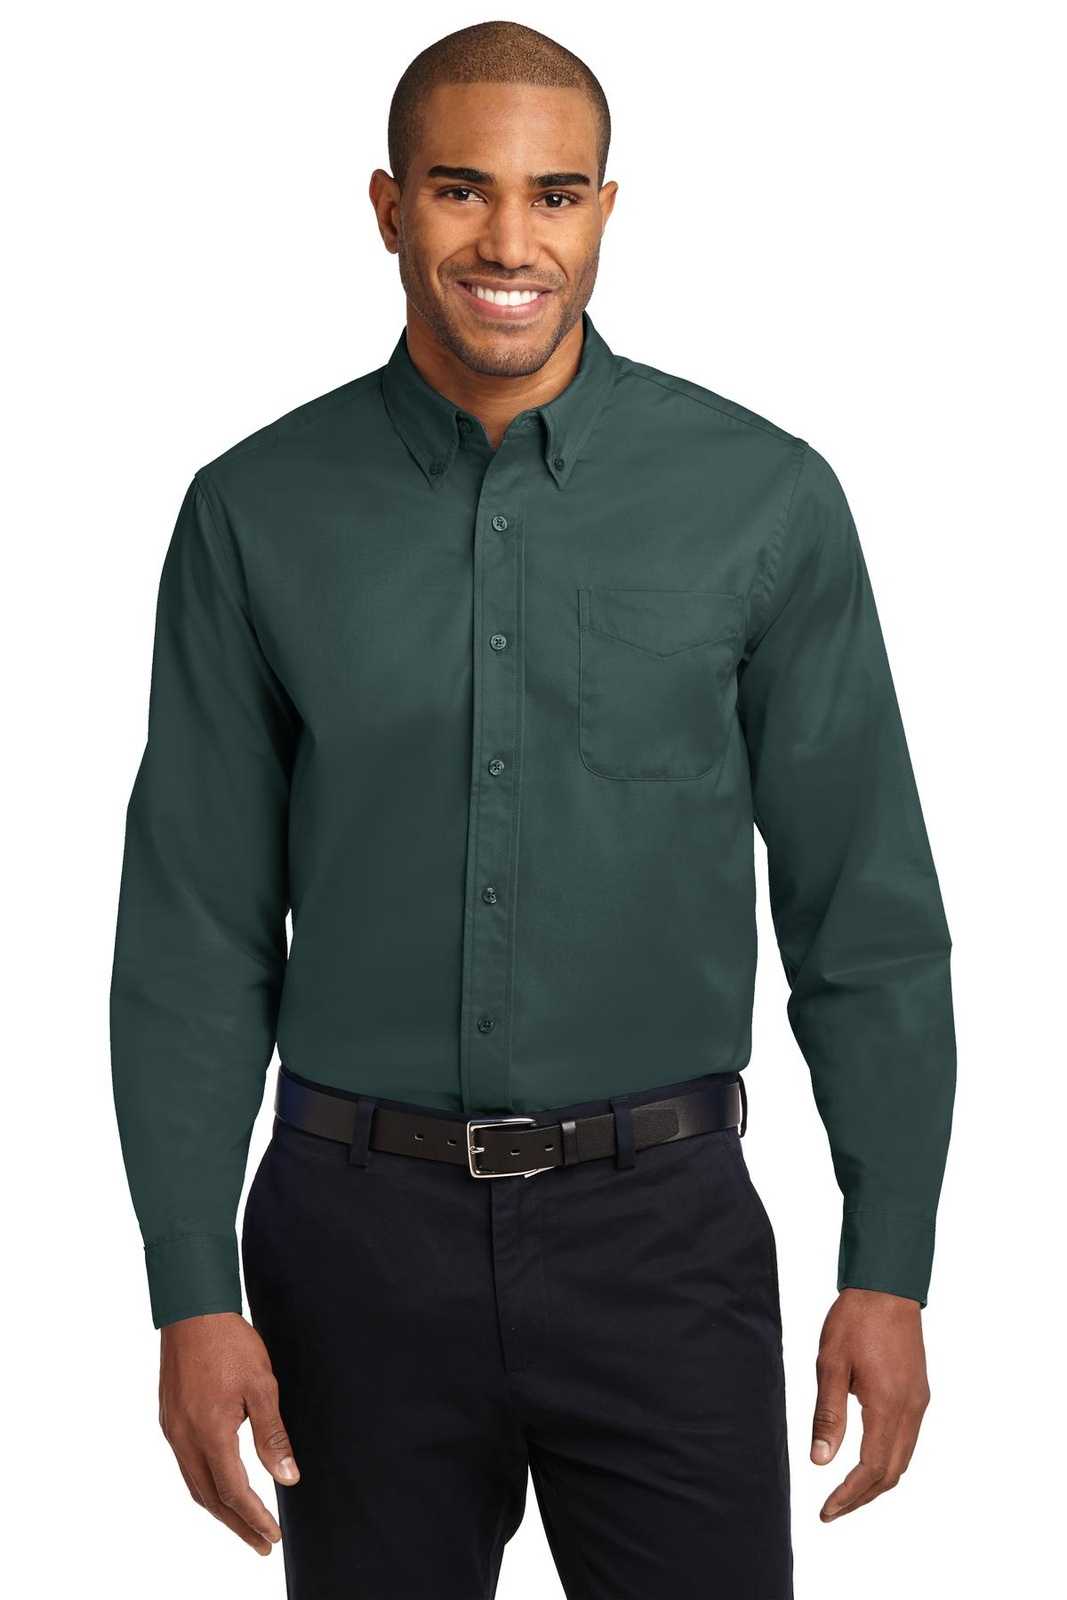 Port Authority S608 Long Sleeve Easy Care Shirt - Dark Green Navy - HIT a Double - 1